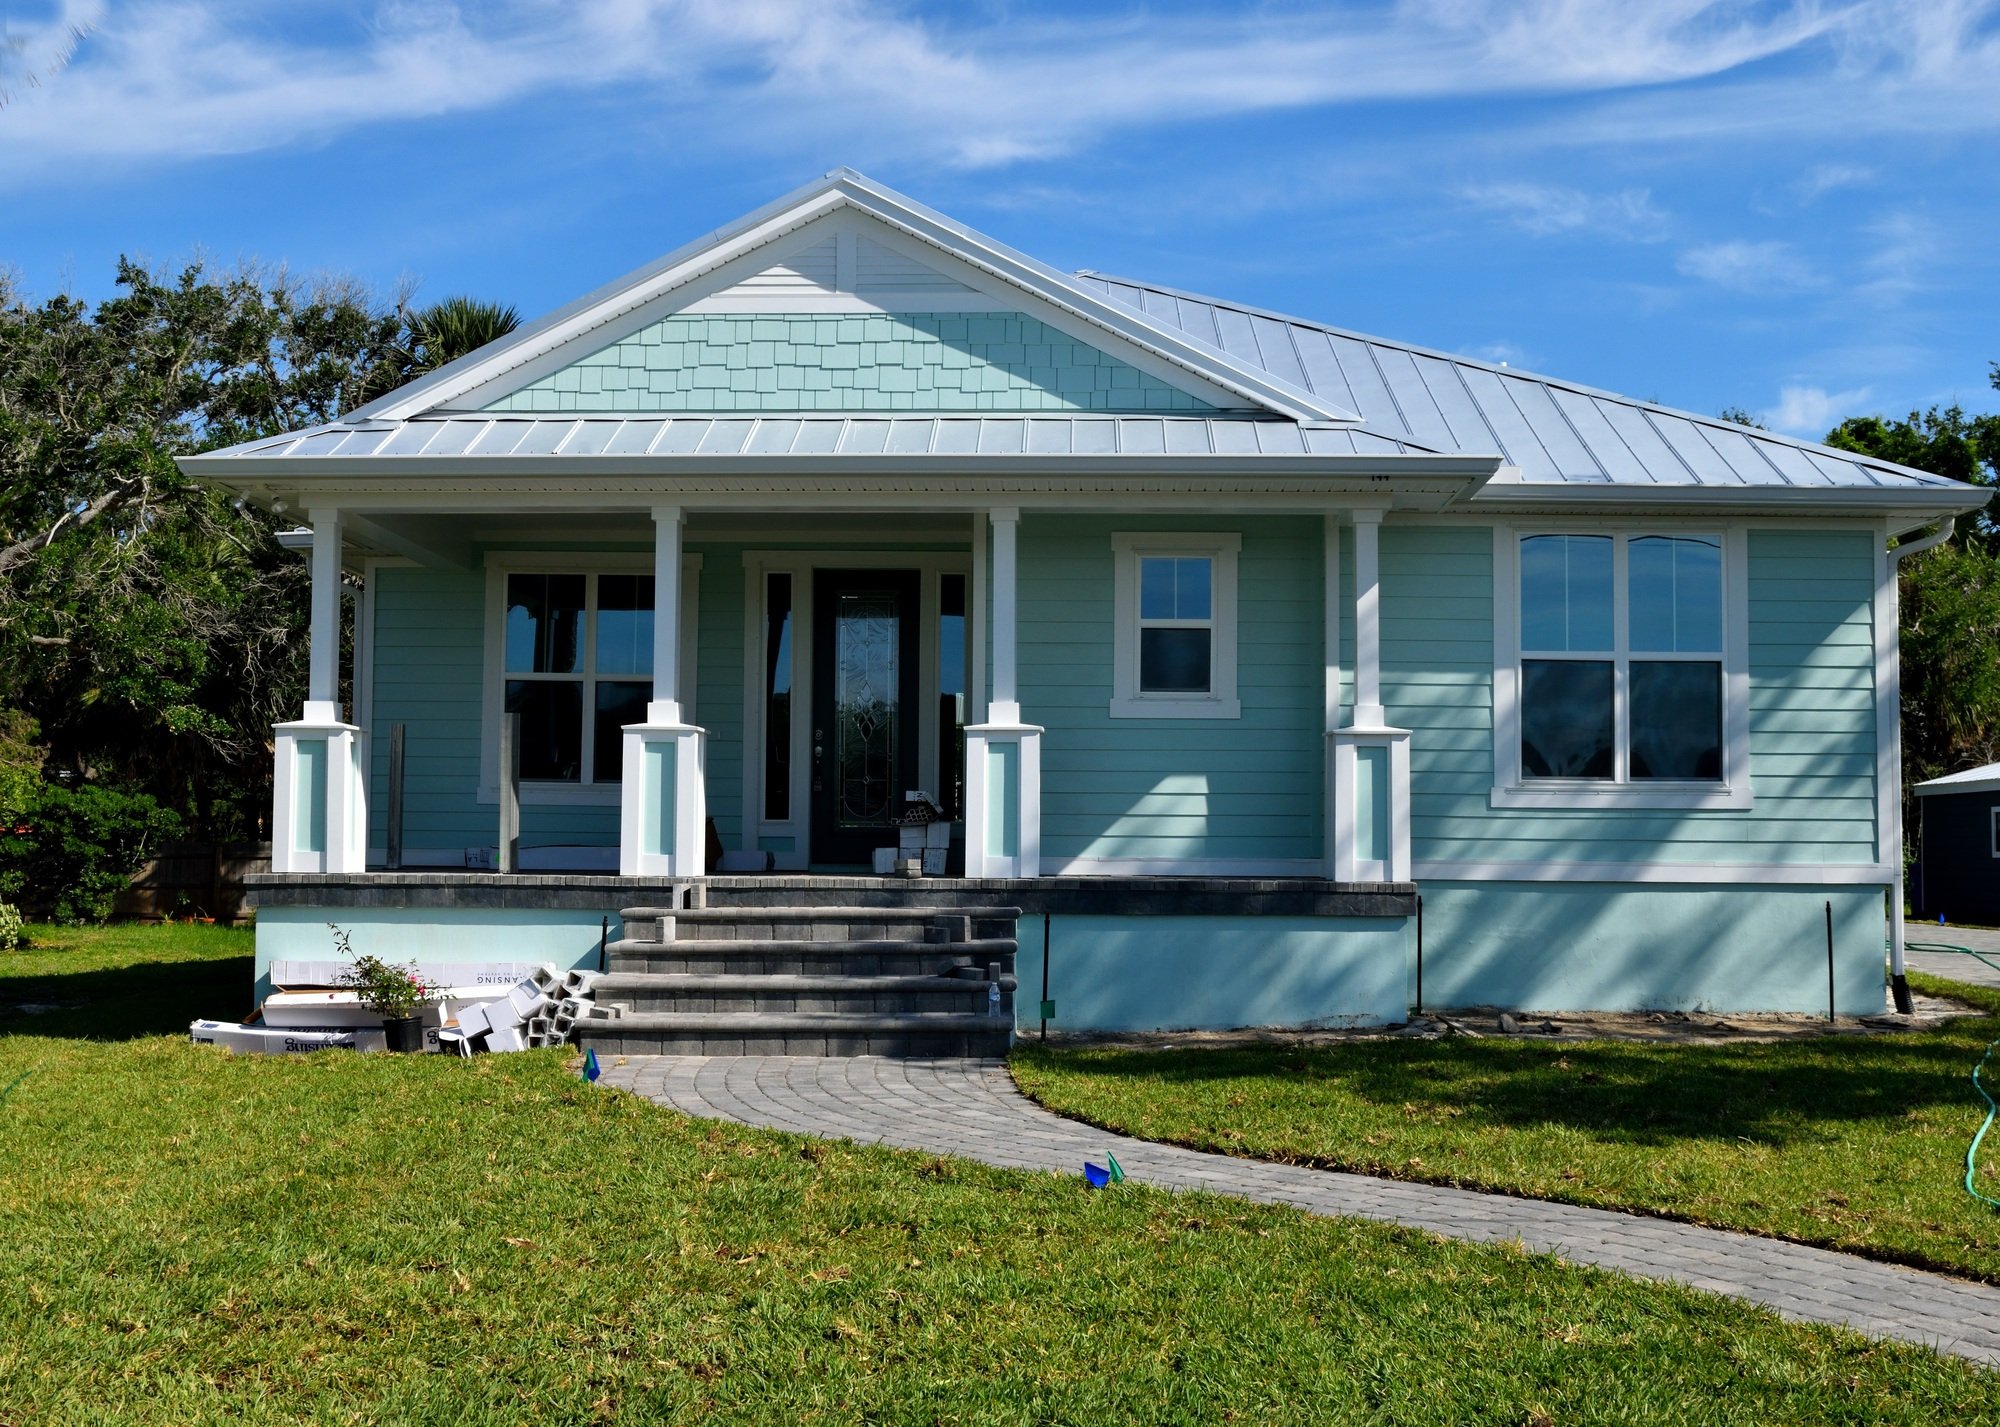 How Often Should a Landlord Inspect Rental Property in Rockville, MD